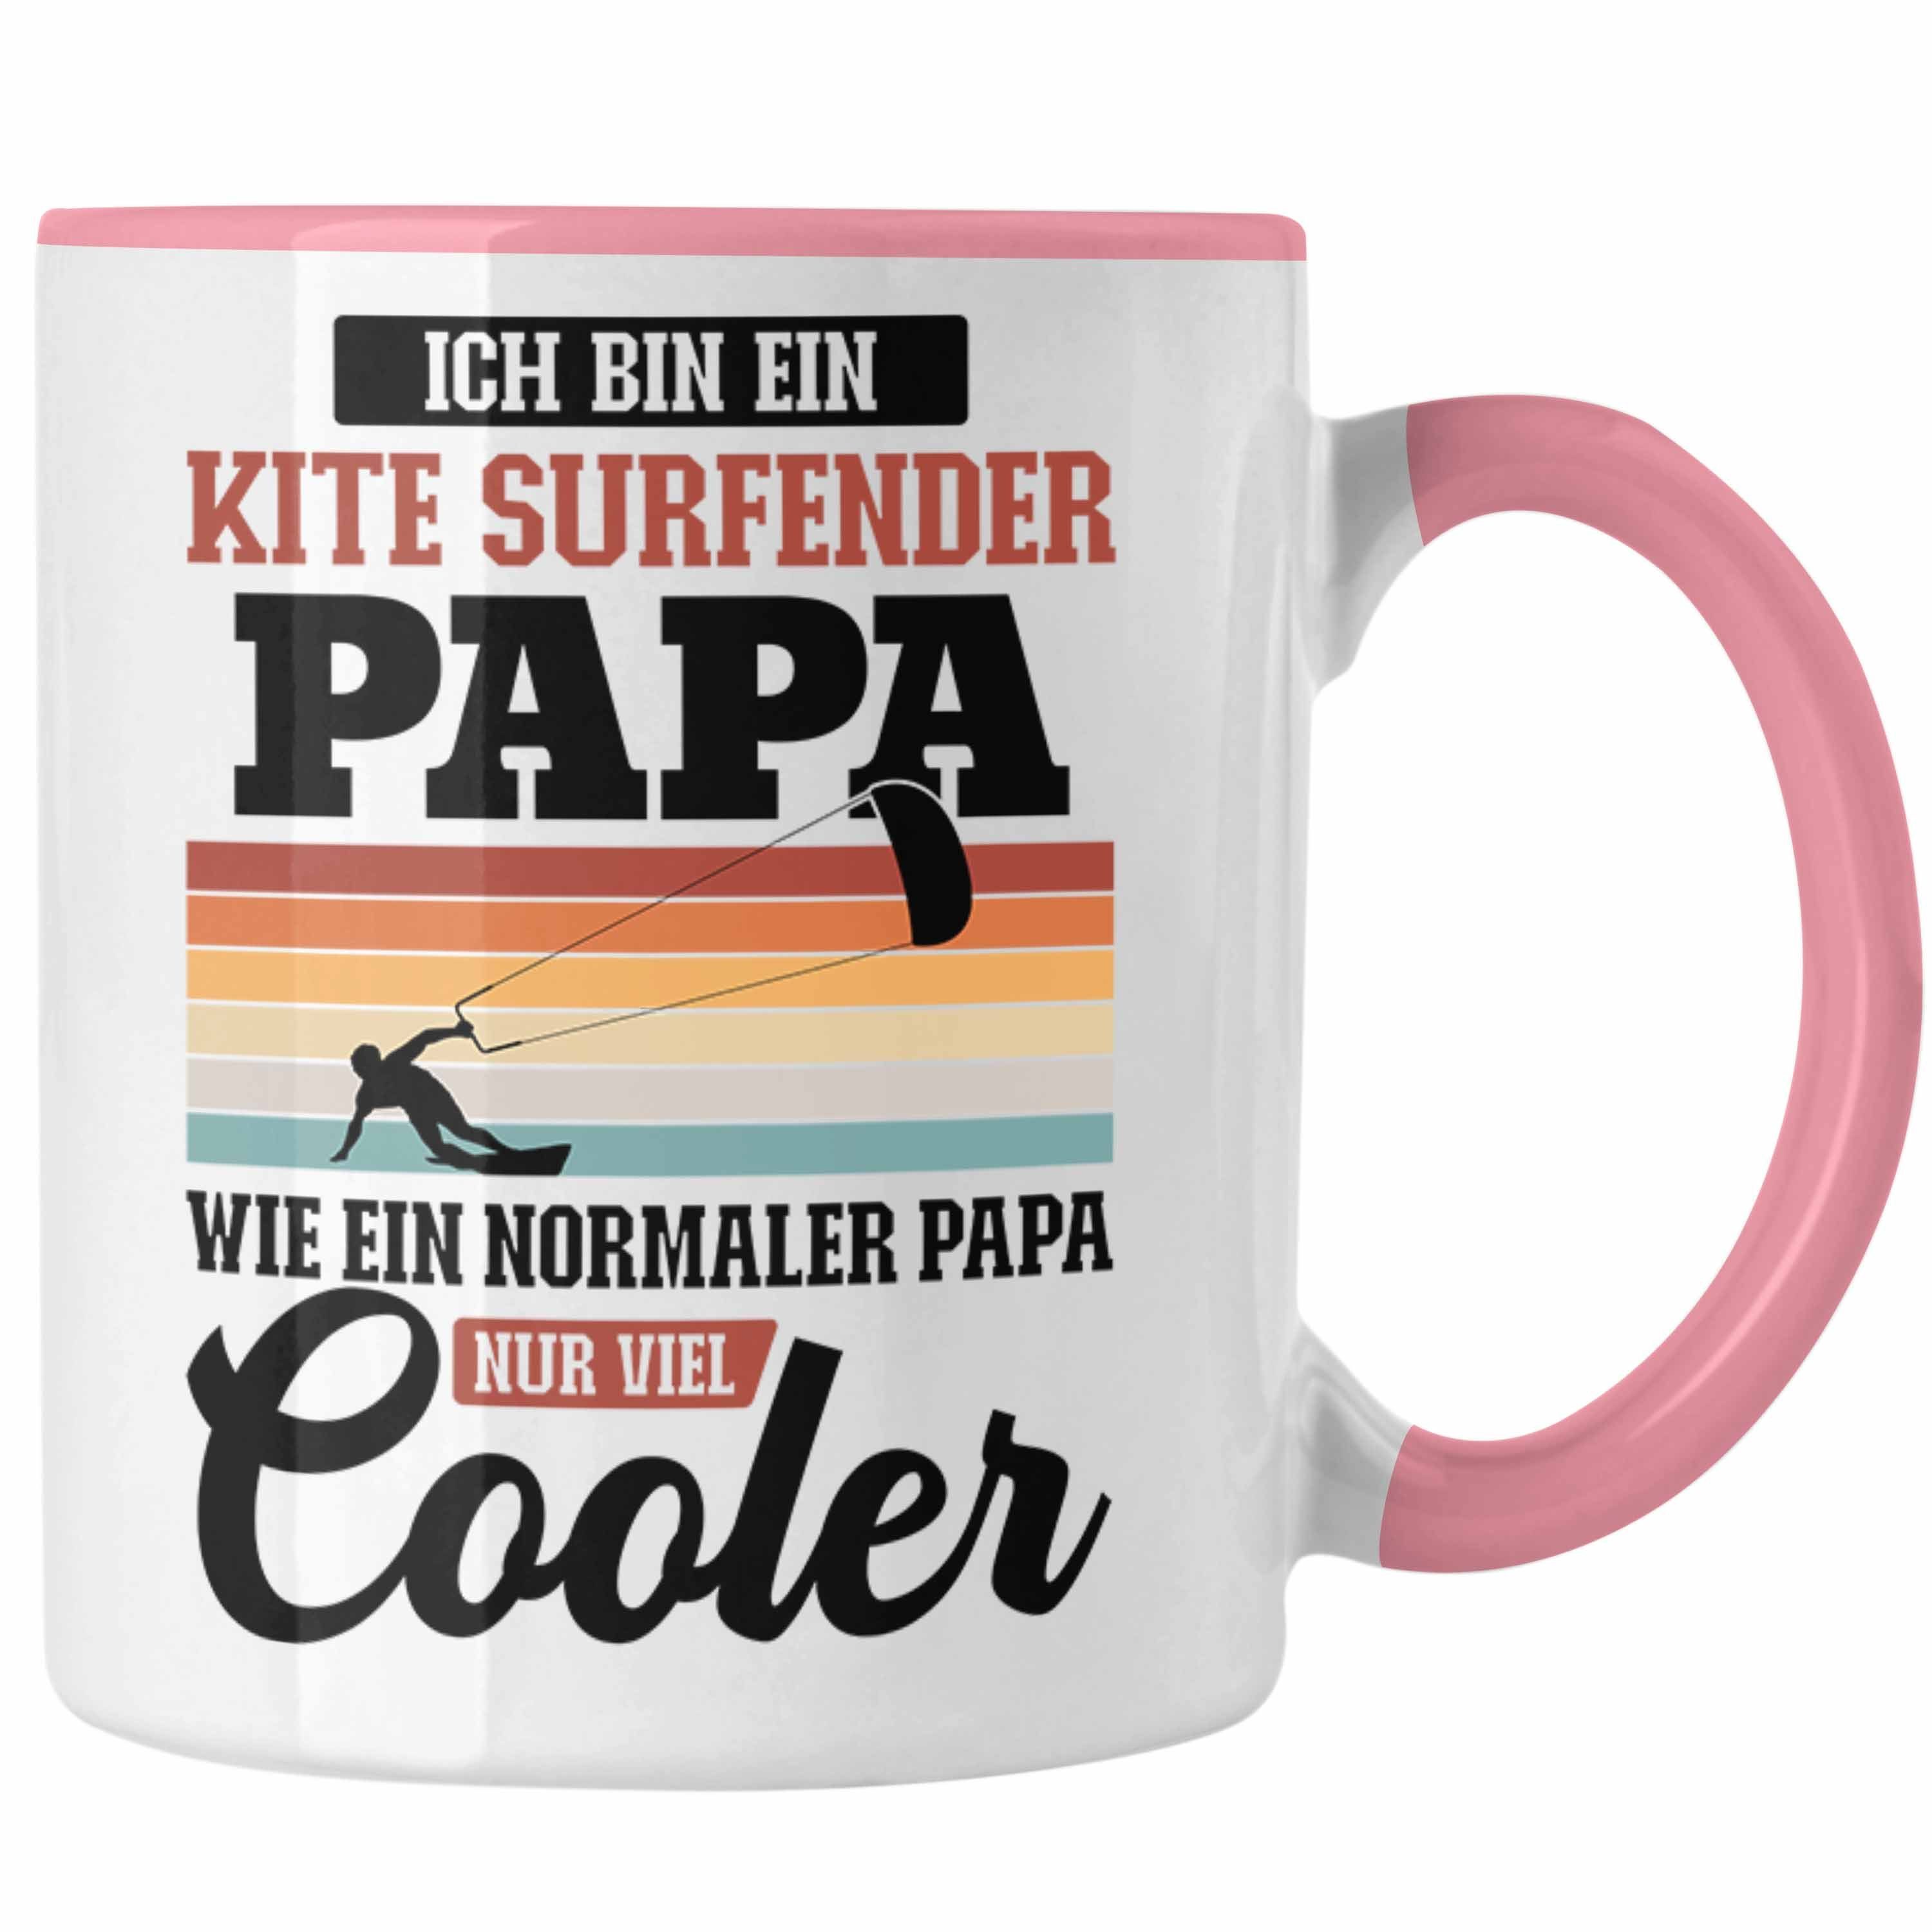 Trendation Tasse Trendation - Kitesurf Papa Kitesurfen Geschenk Tasse Vater Kite Surfender Papa Kitesurfing Rosa